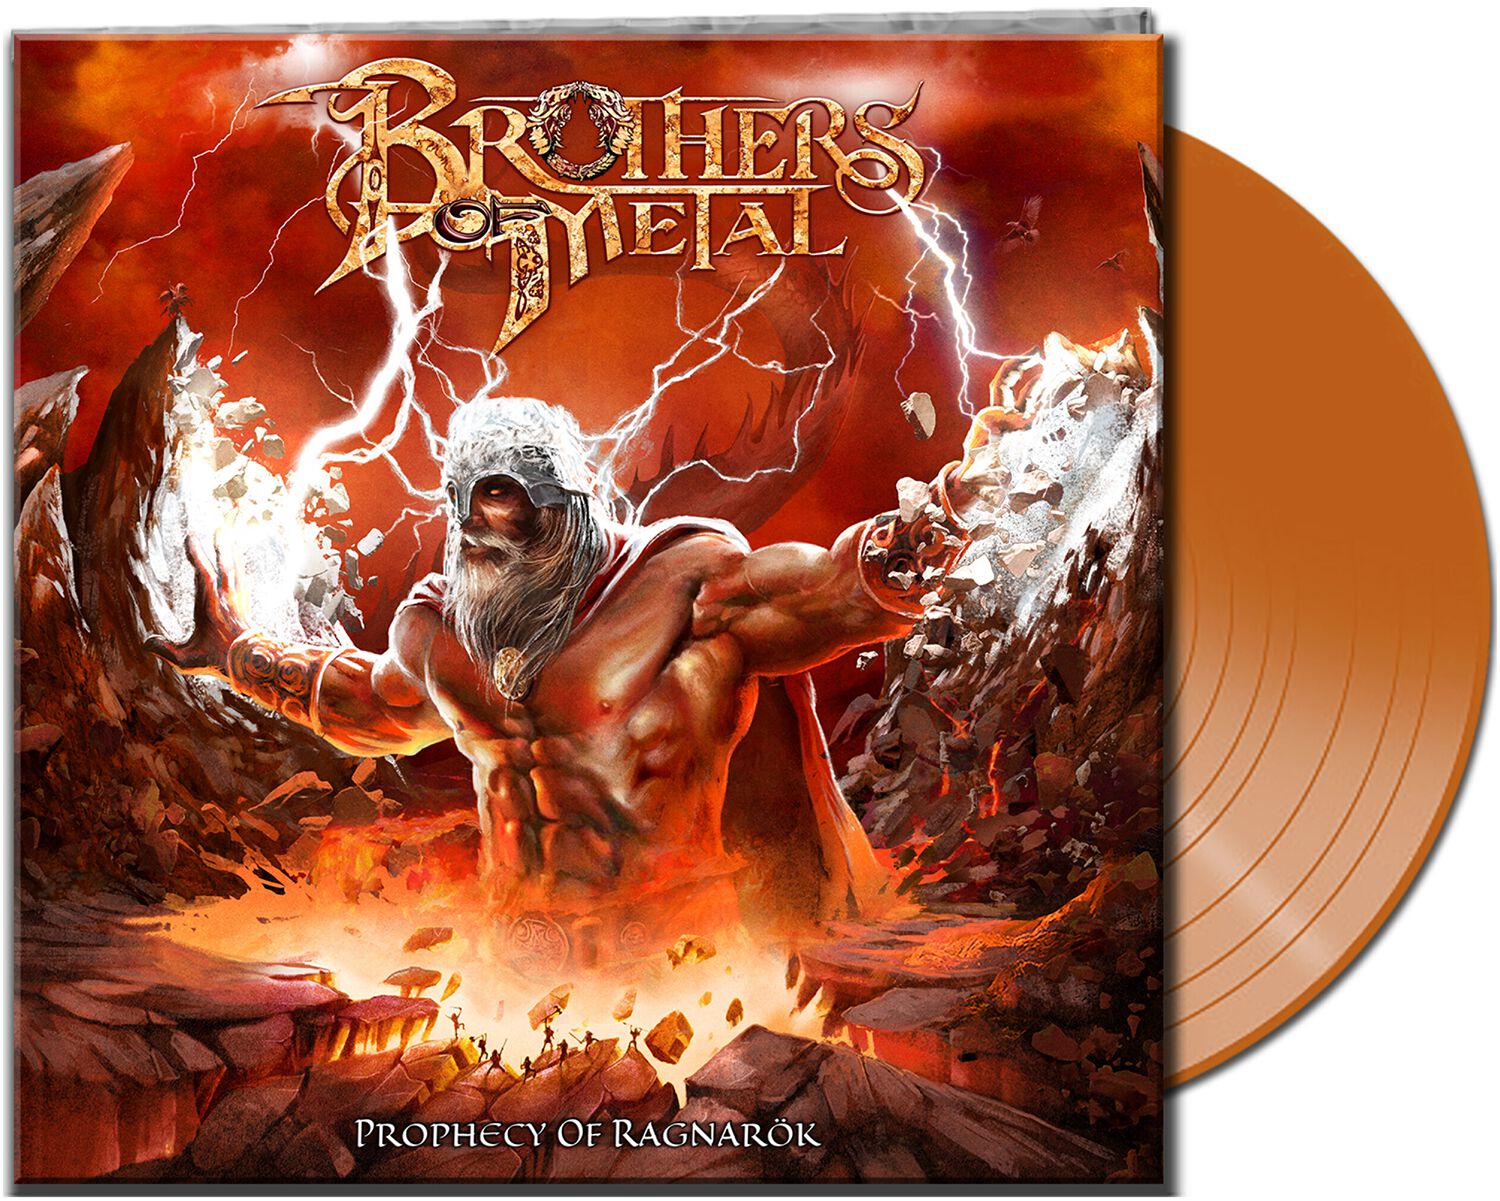 Image of Brothers Of Metal Prophecy of Ragnarök LP orange